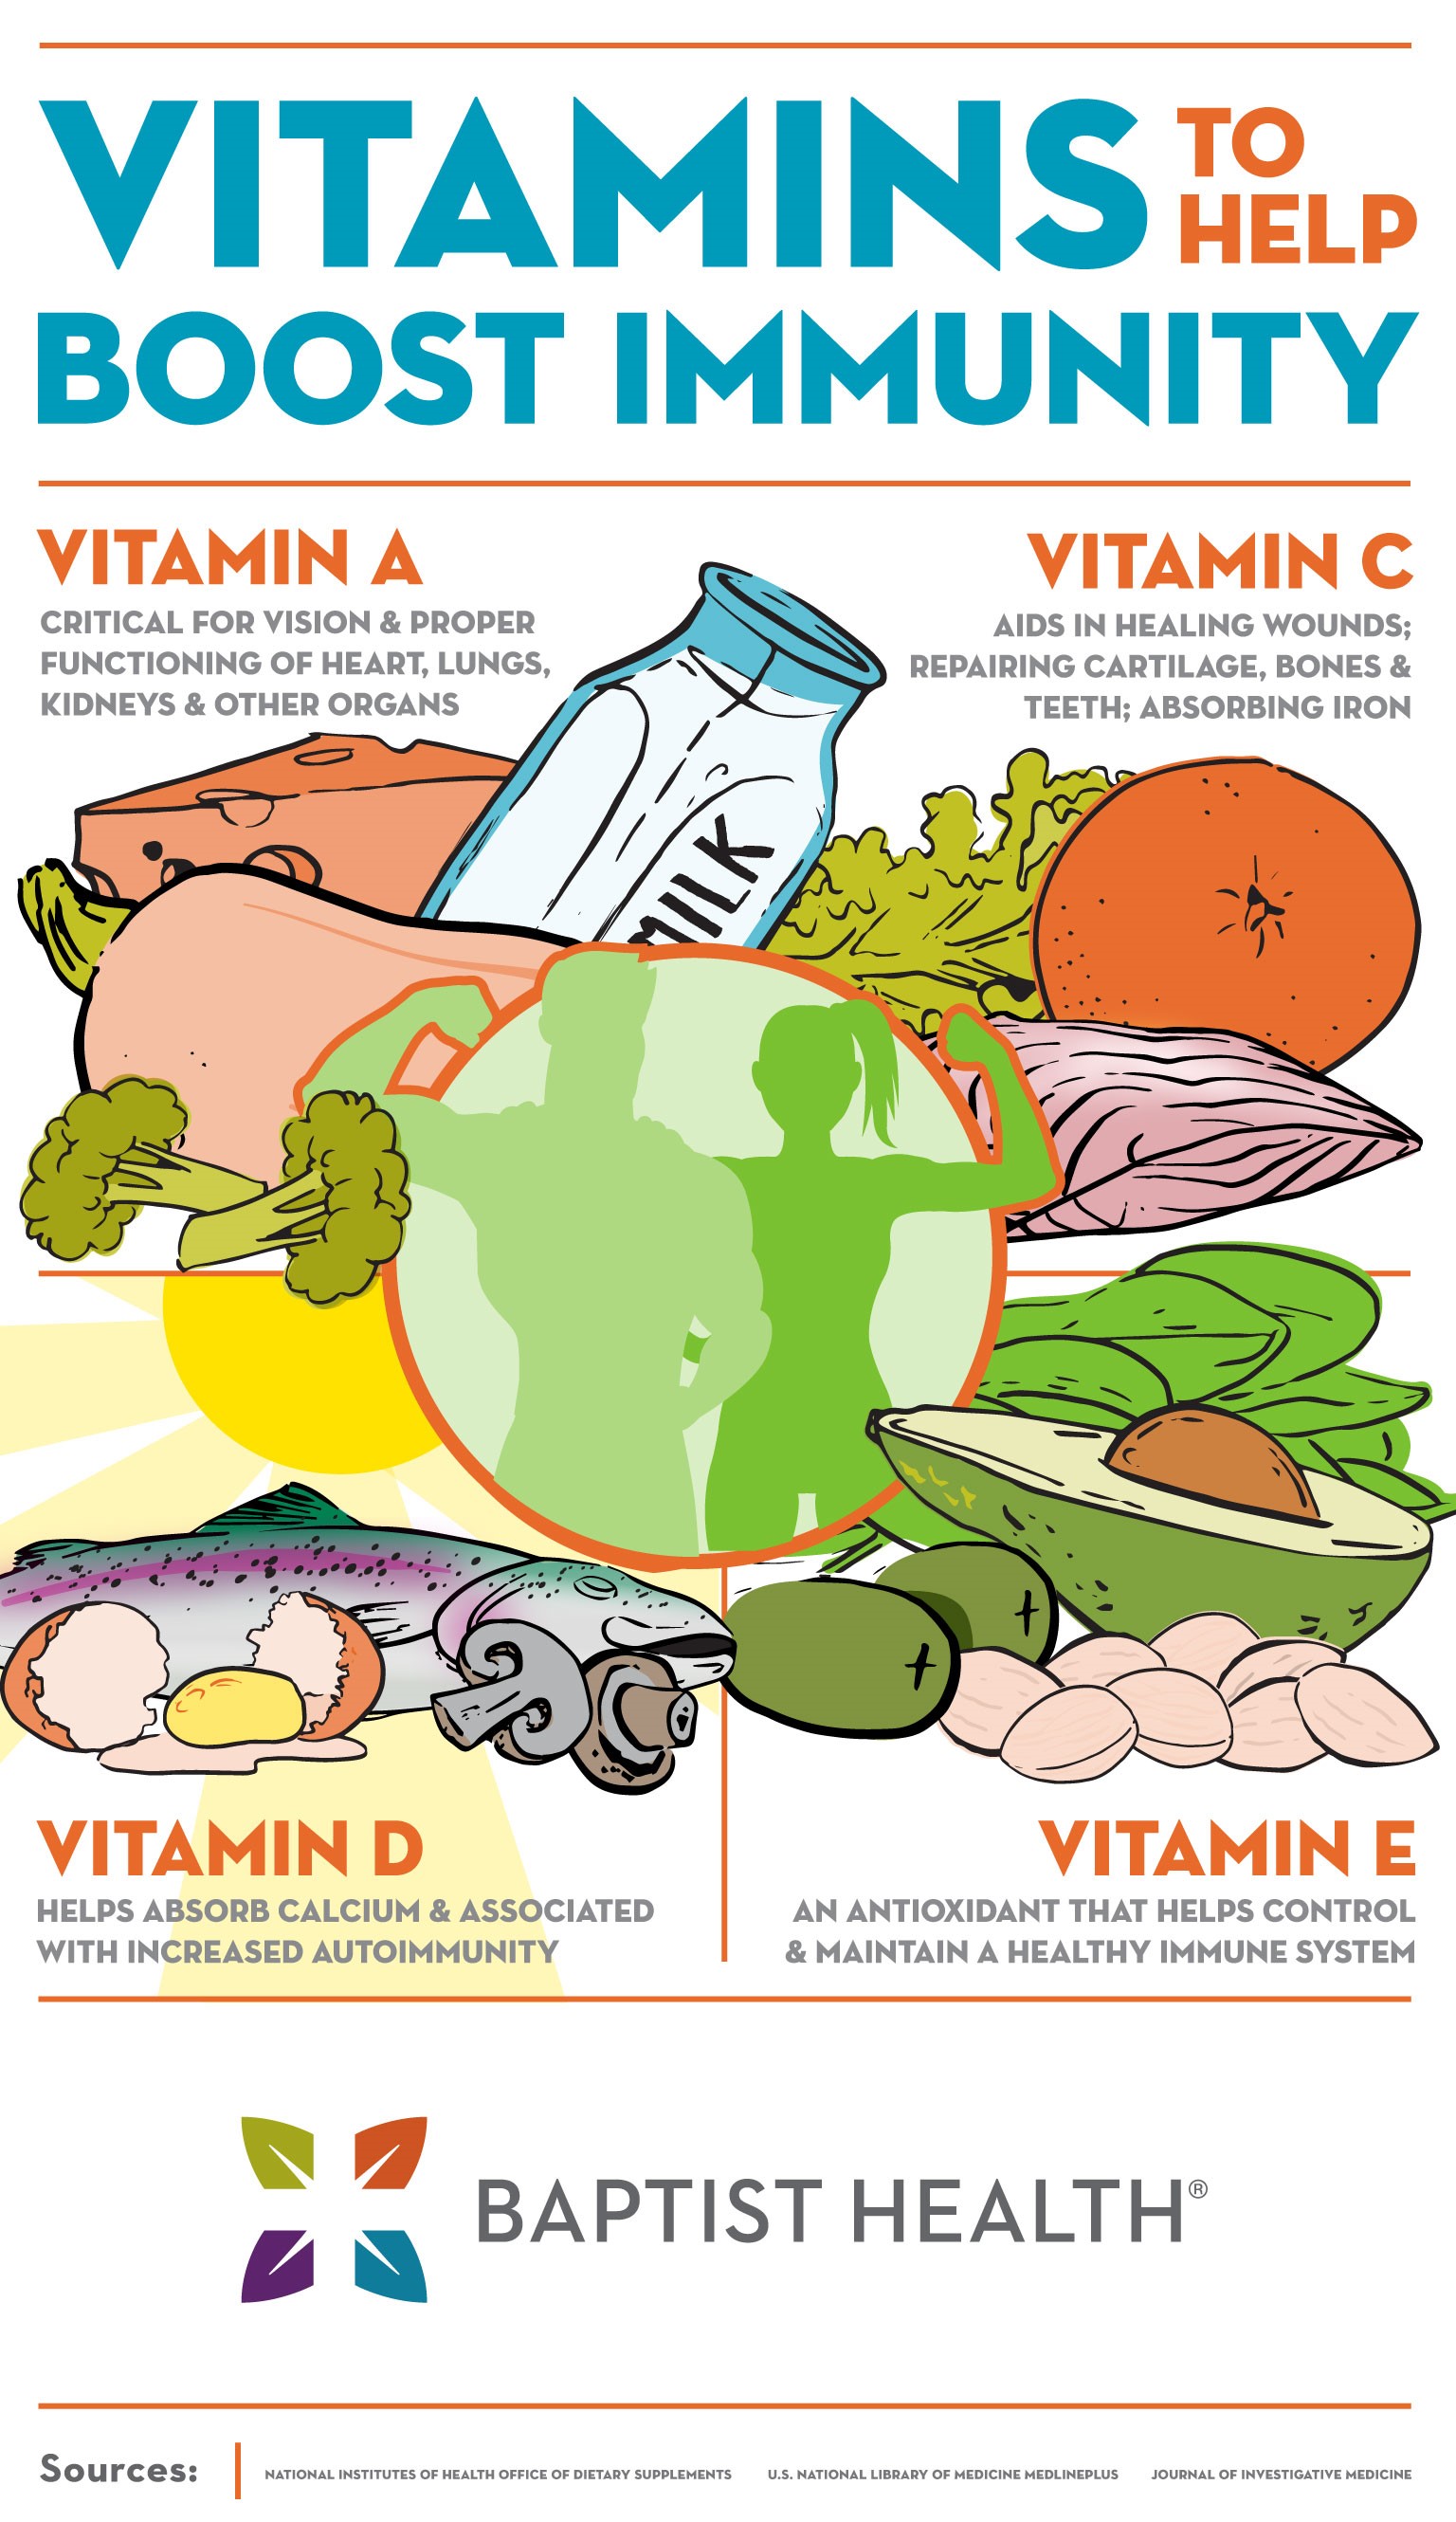 Immune system-boosting vitamins